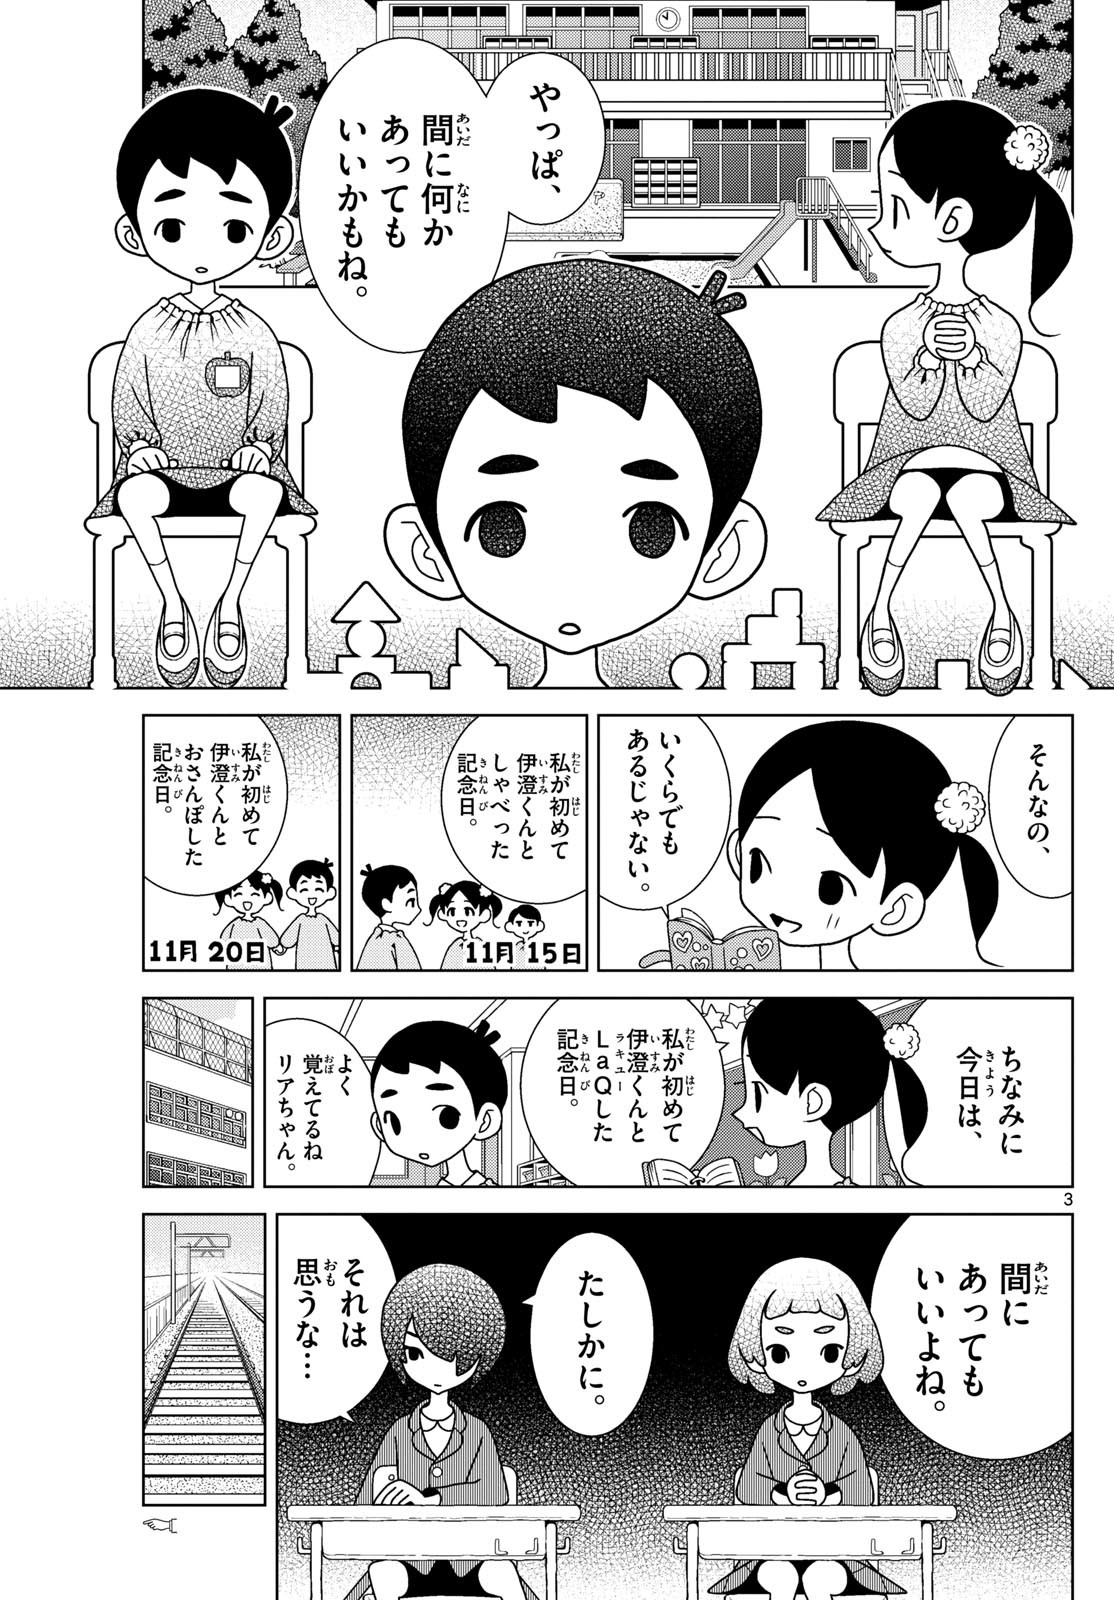 Shibuya Near Family - Chapter 080 - Page 3